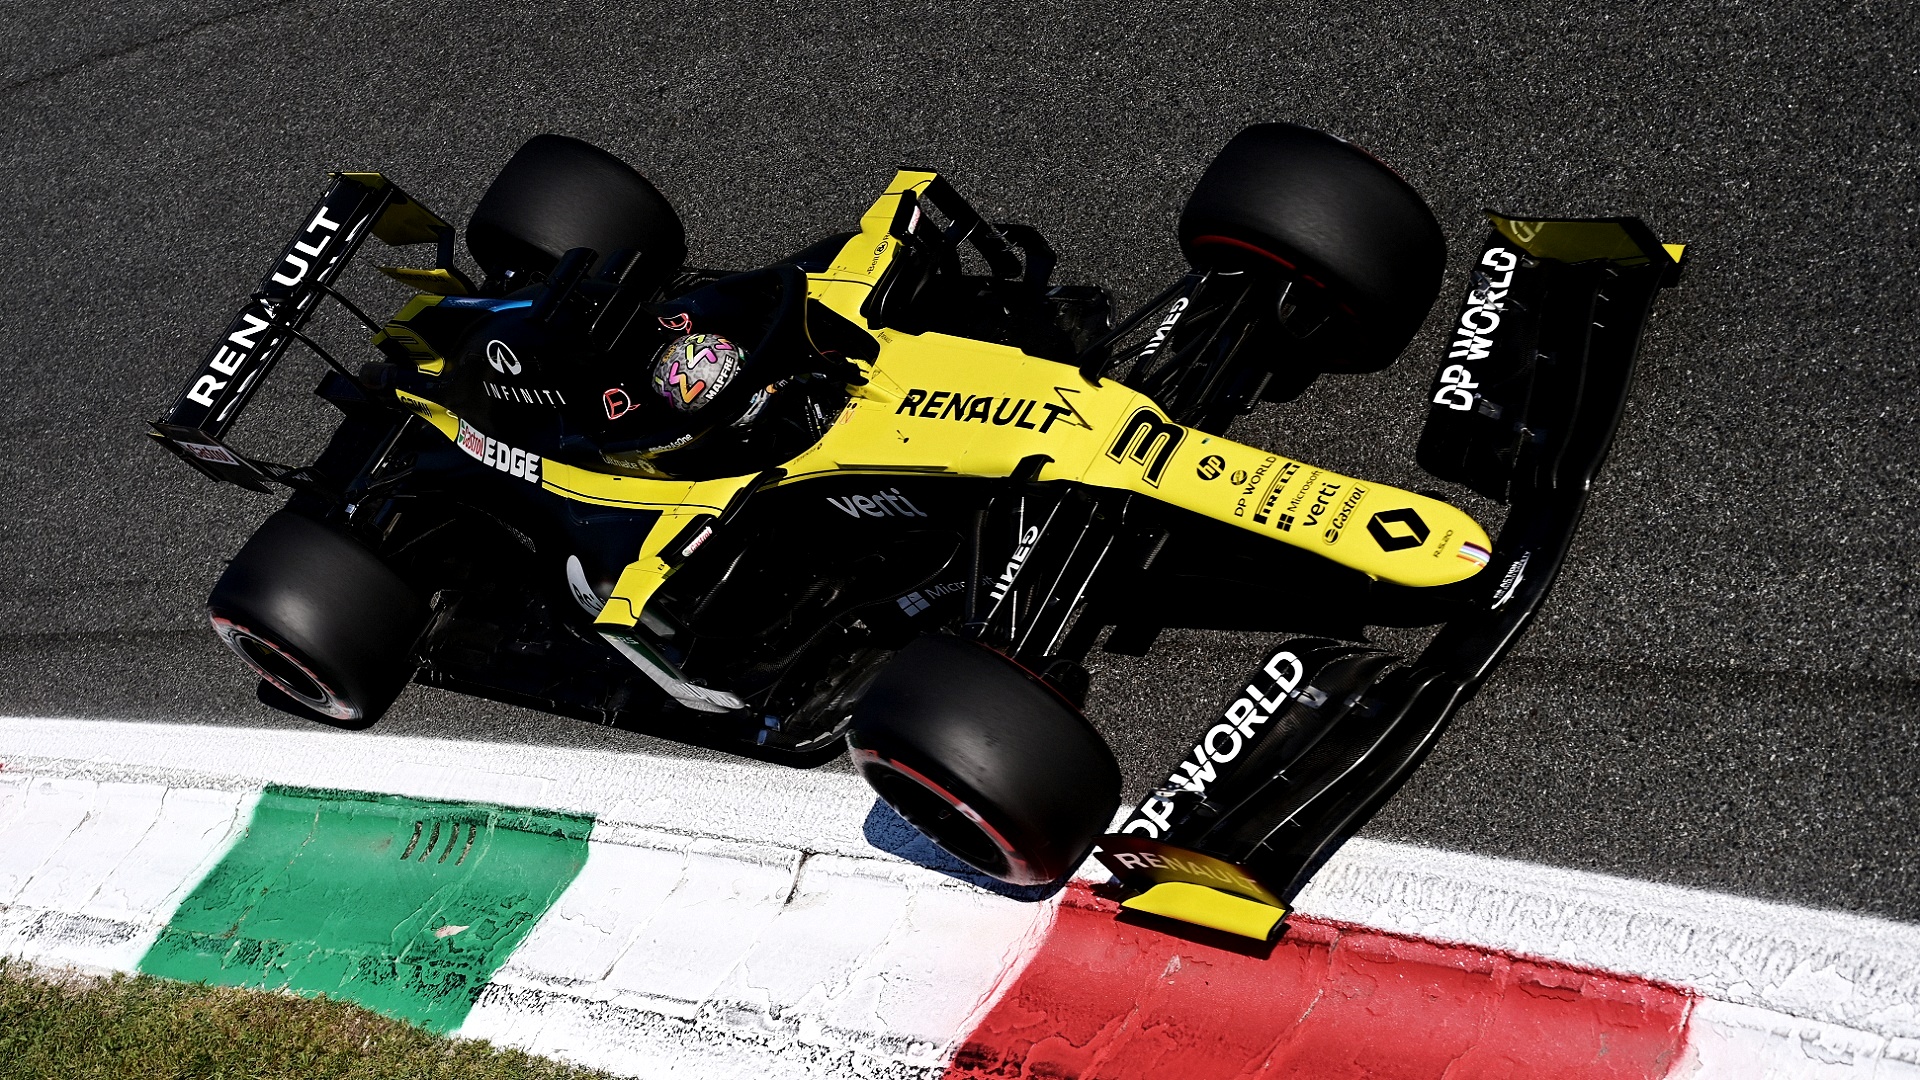 2020-09-06 Renault Daniel Ricciardo F1 Formula 1